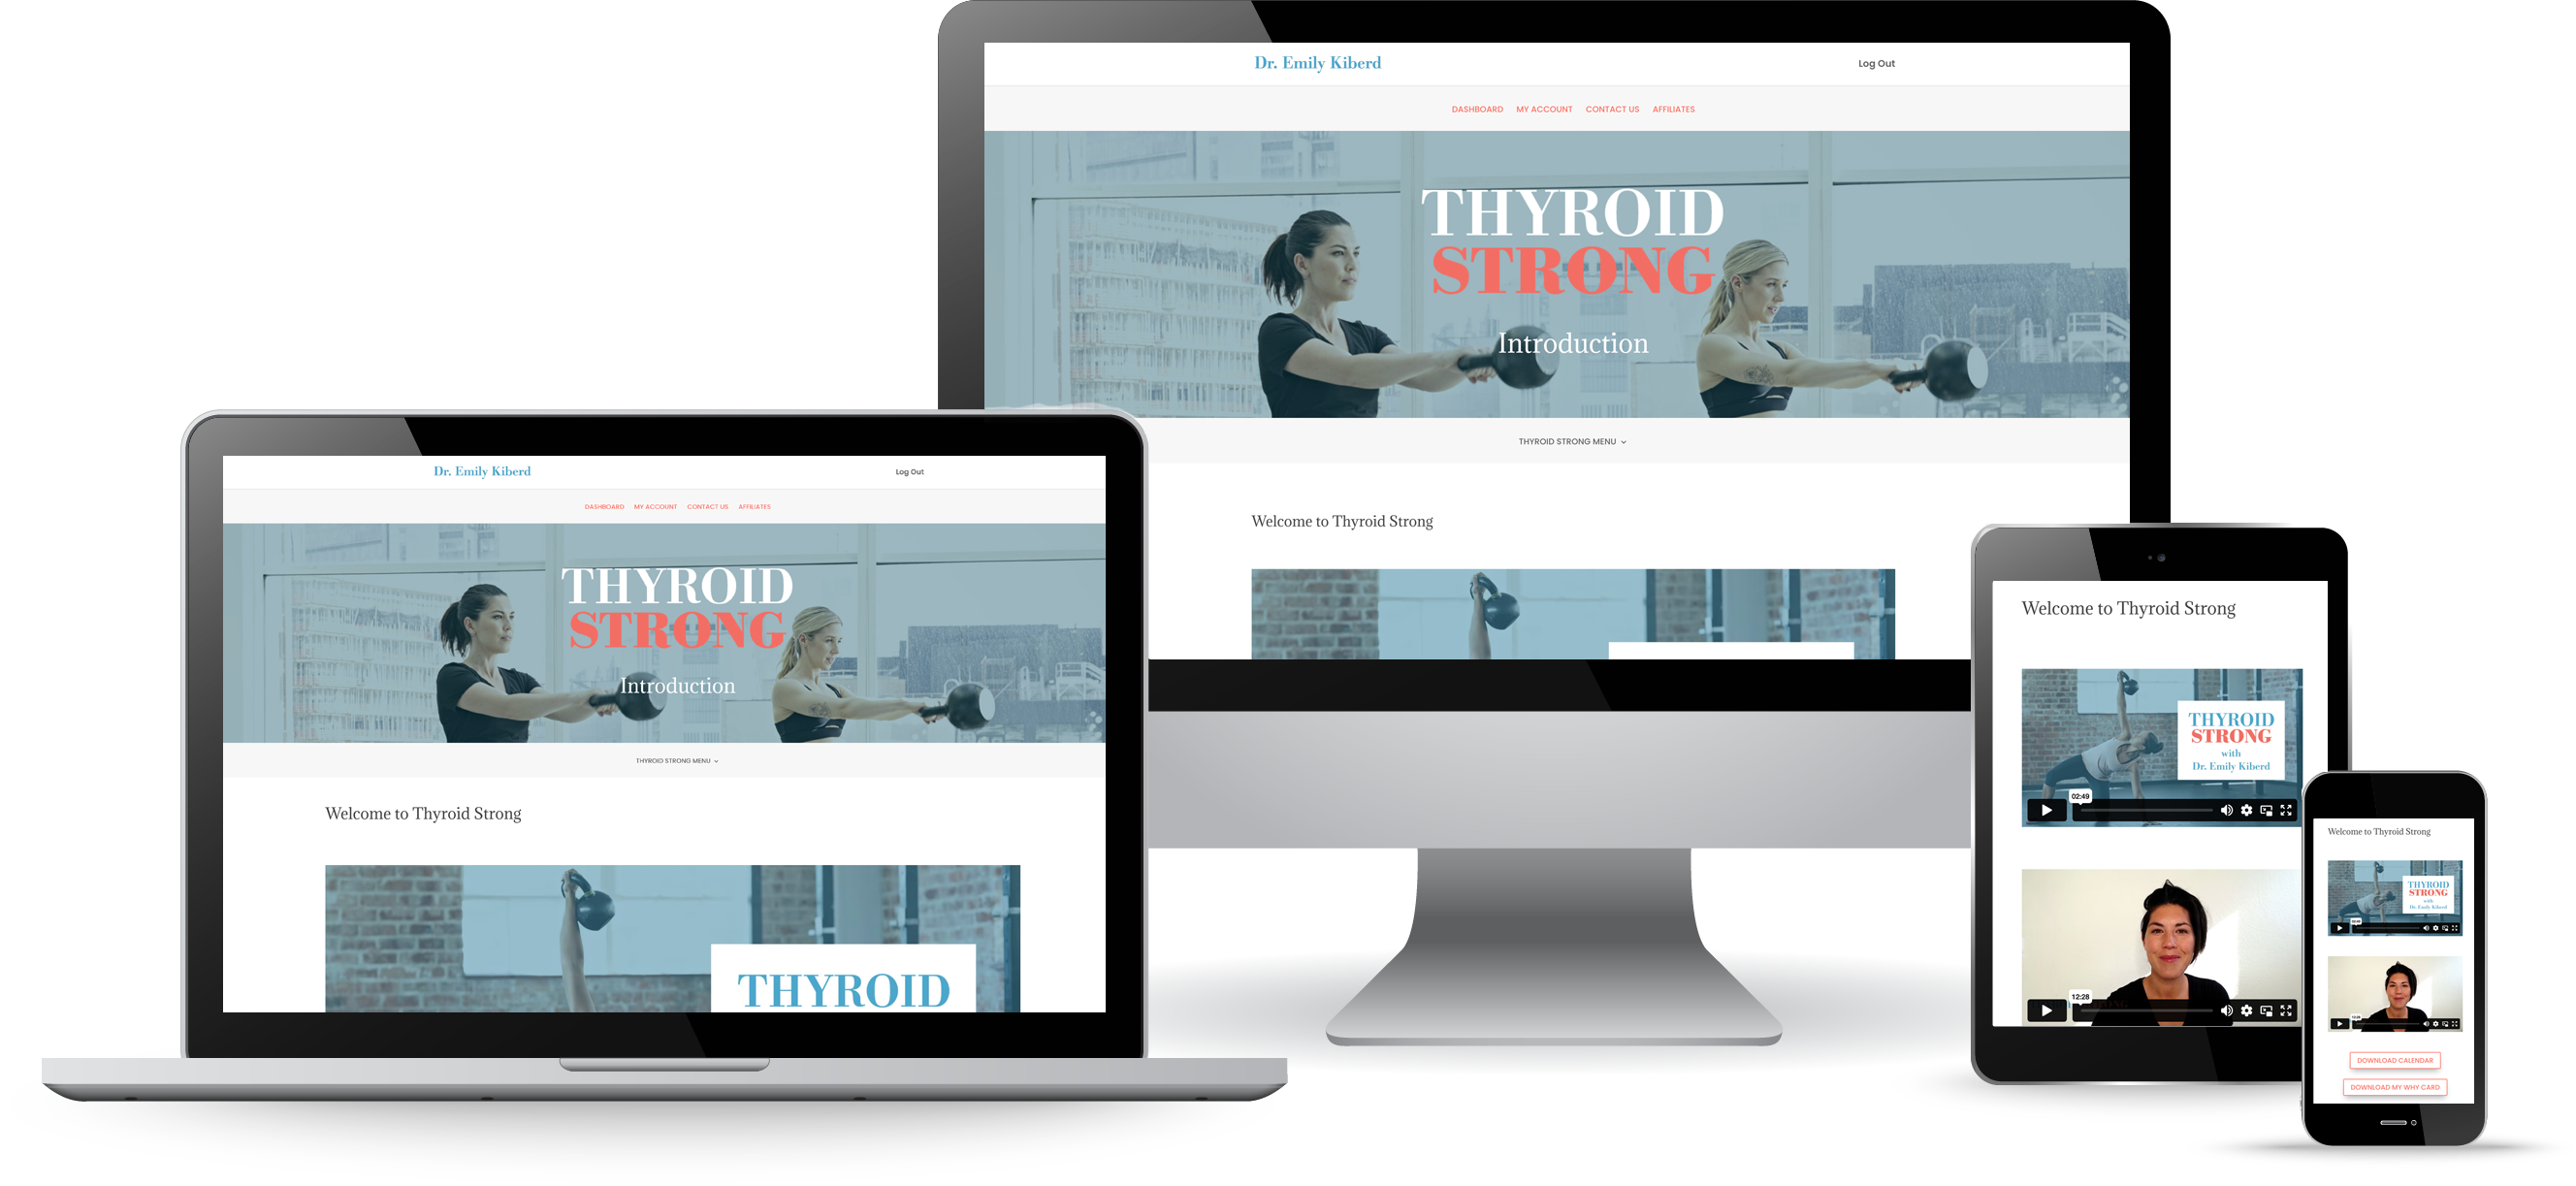 Thyroid Strong Member Site